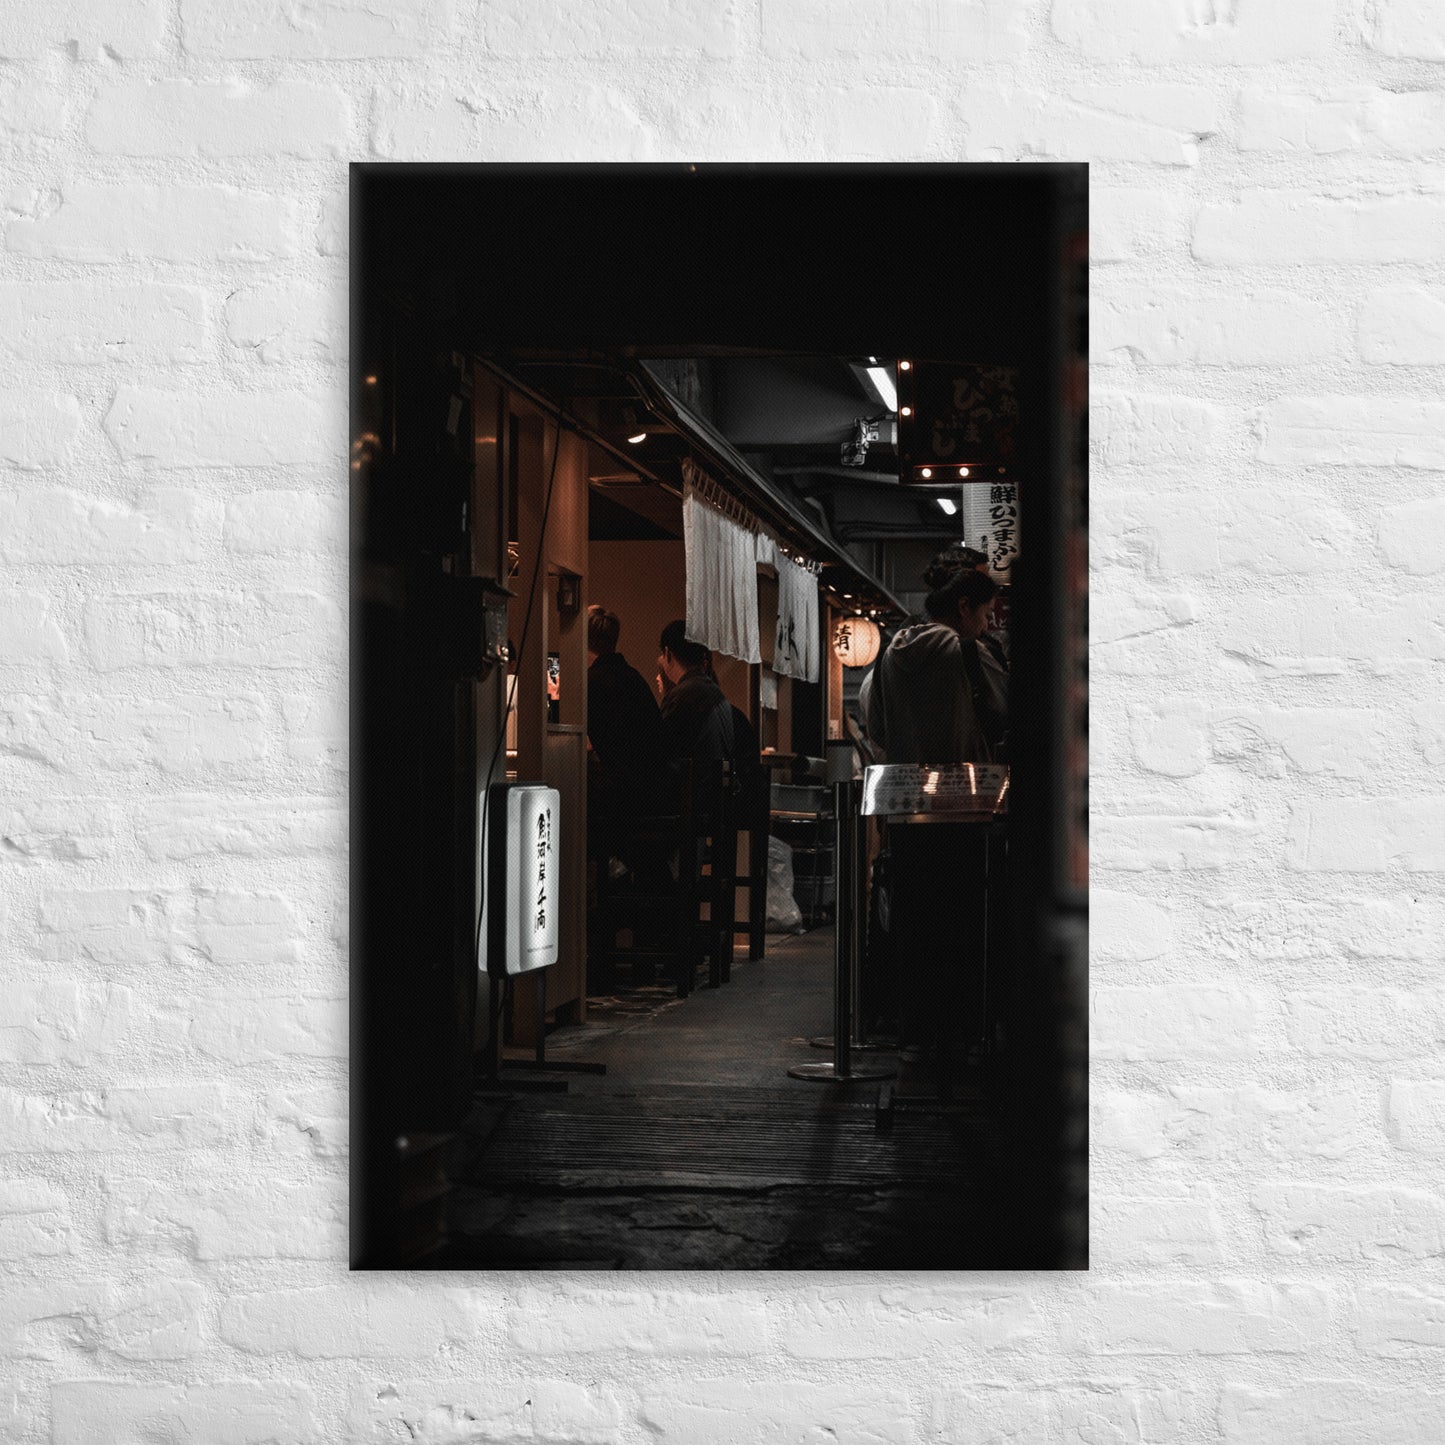 Restaurant alley on canvas